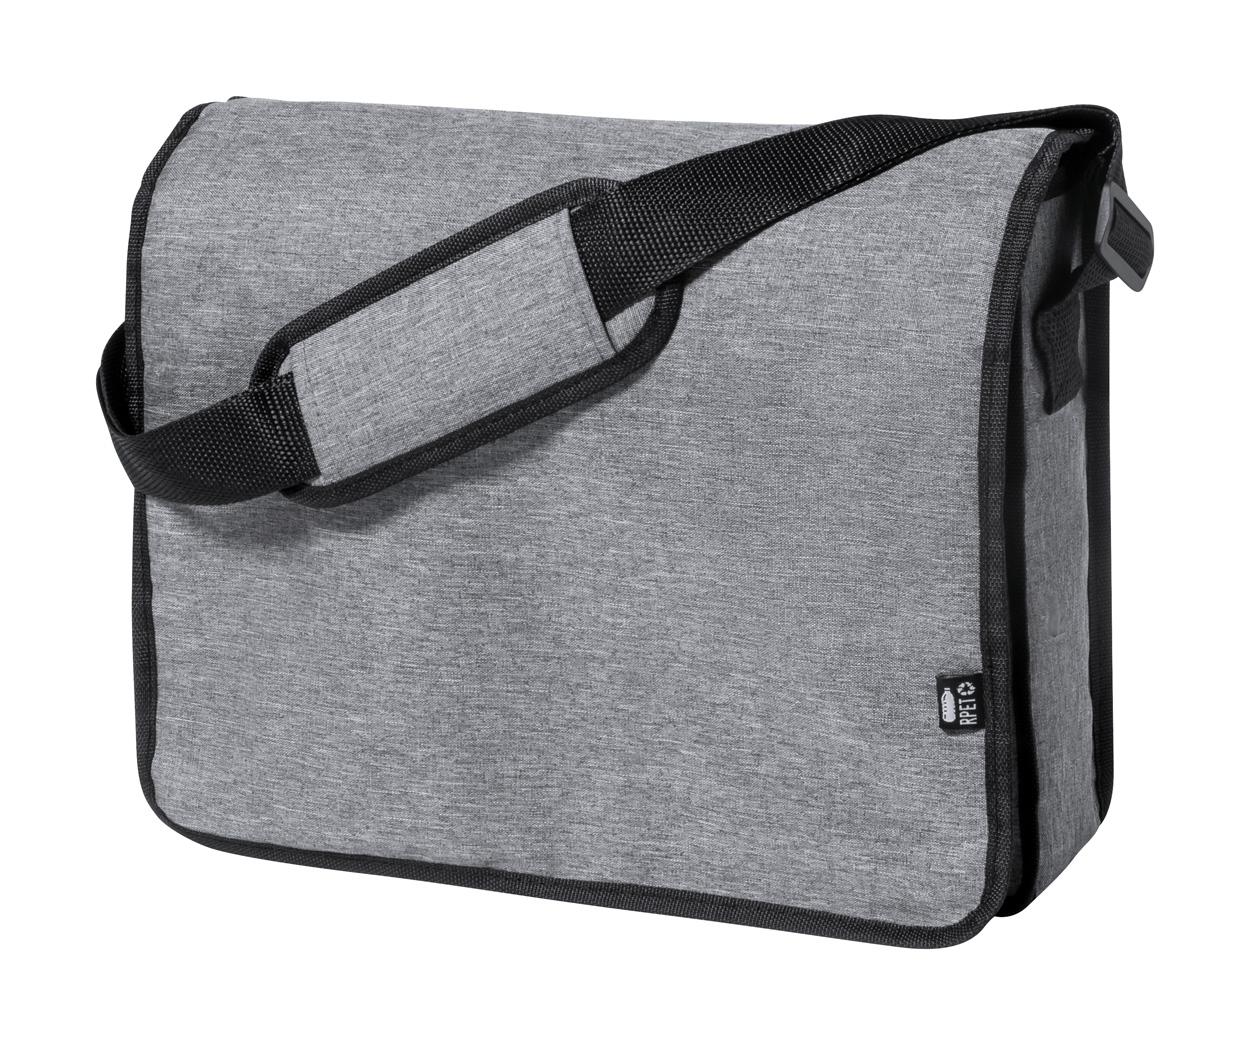 Lourdel RPET shoulder bag - Grau